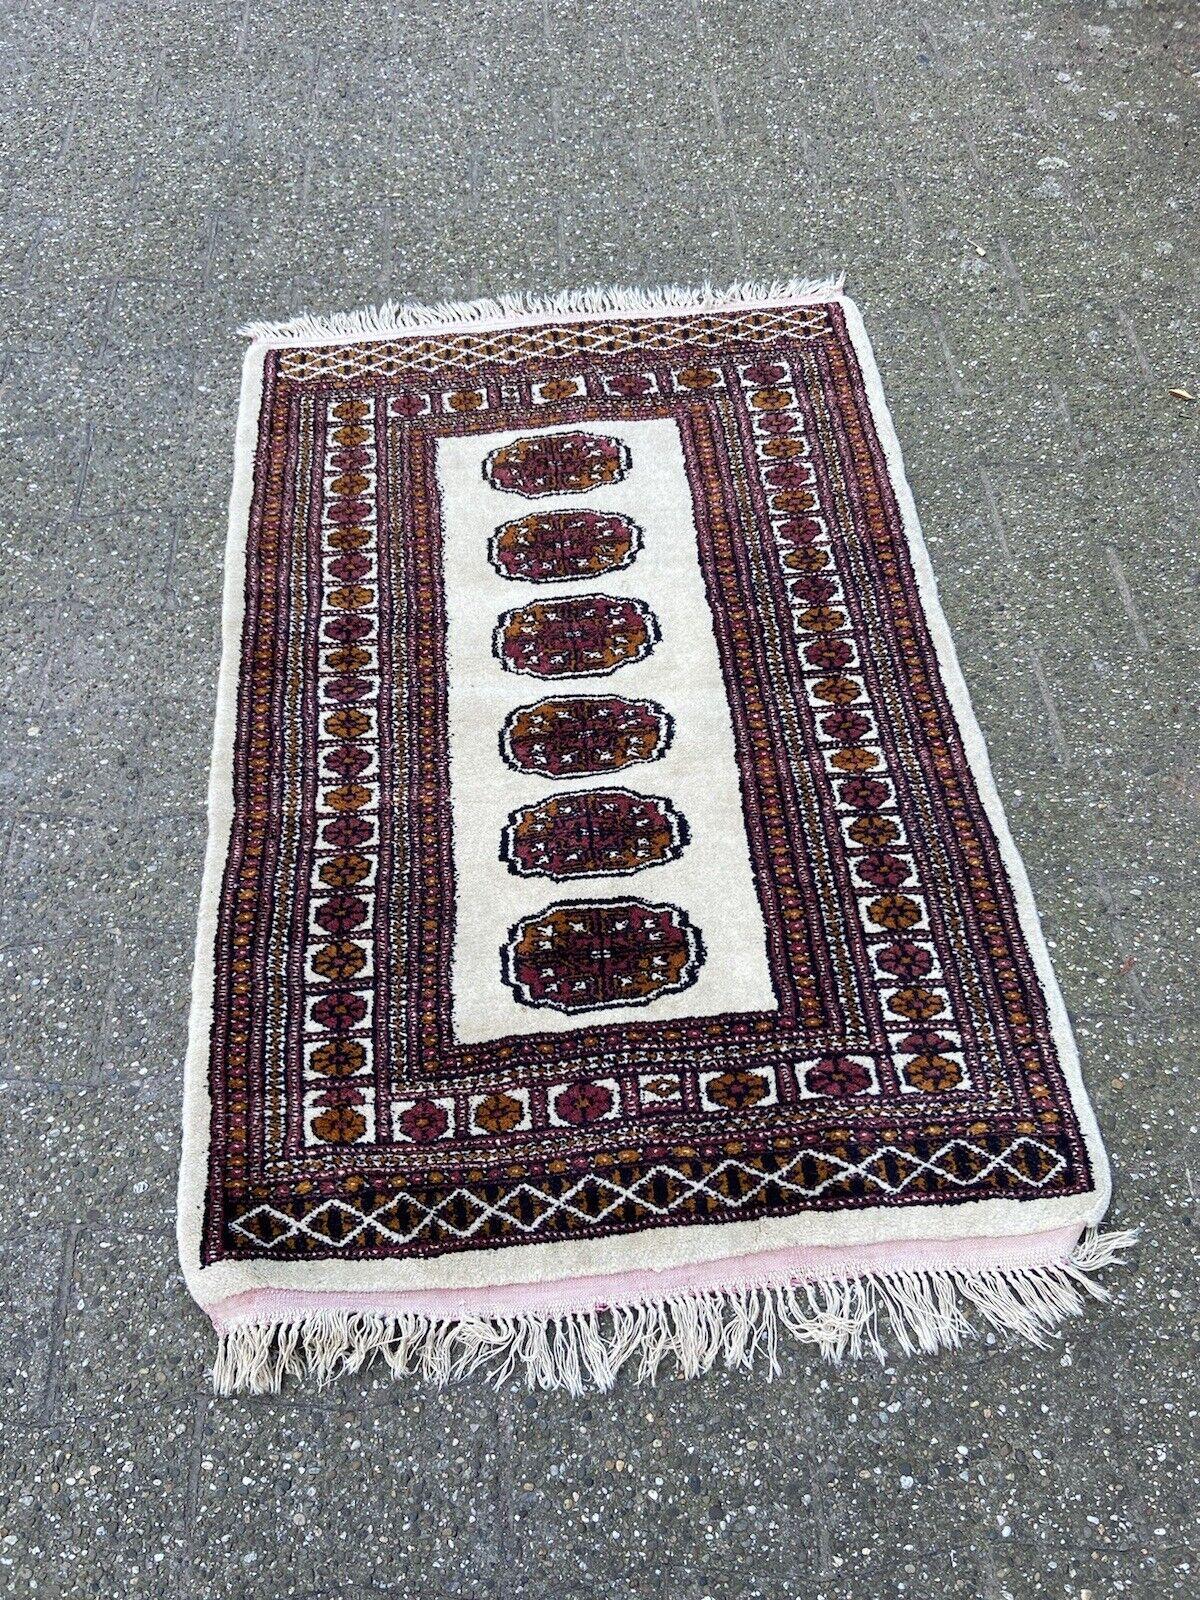 Handmade Vintage Uzbek Bukhara Rug 2.7' x 4.3', 1960s - 1S09 For Sale 1